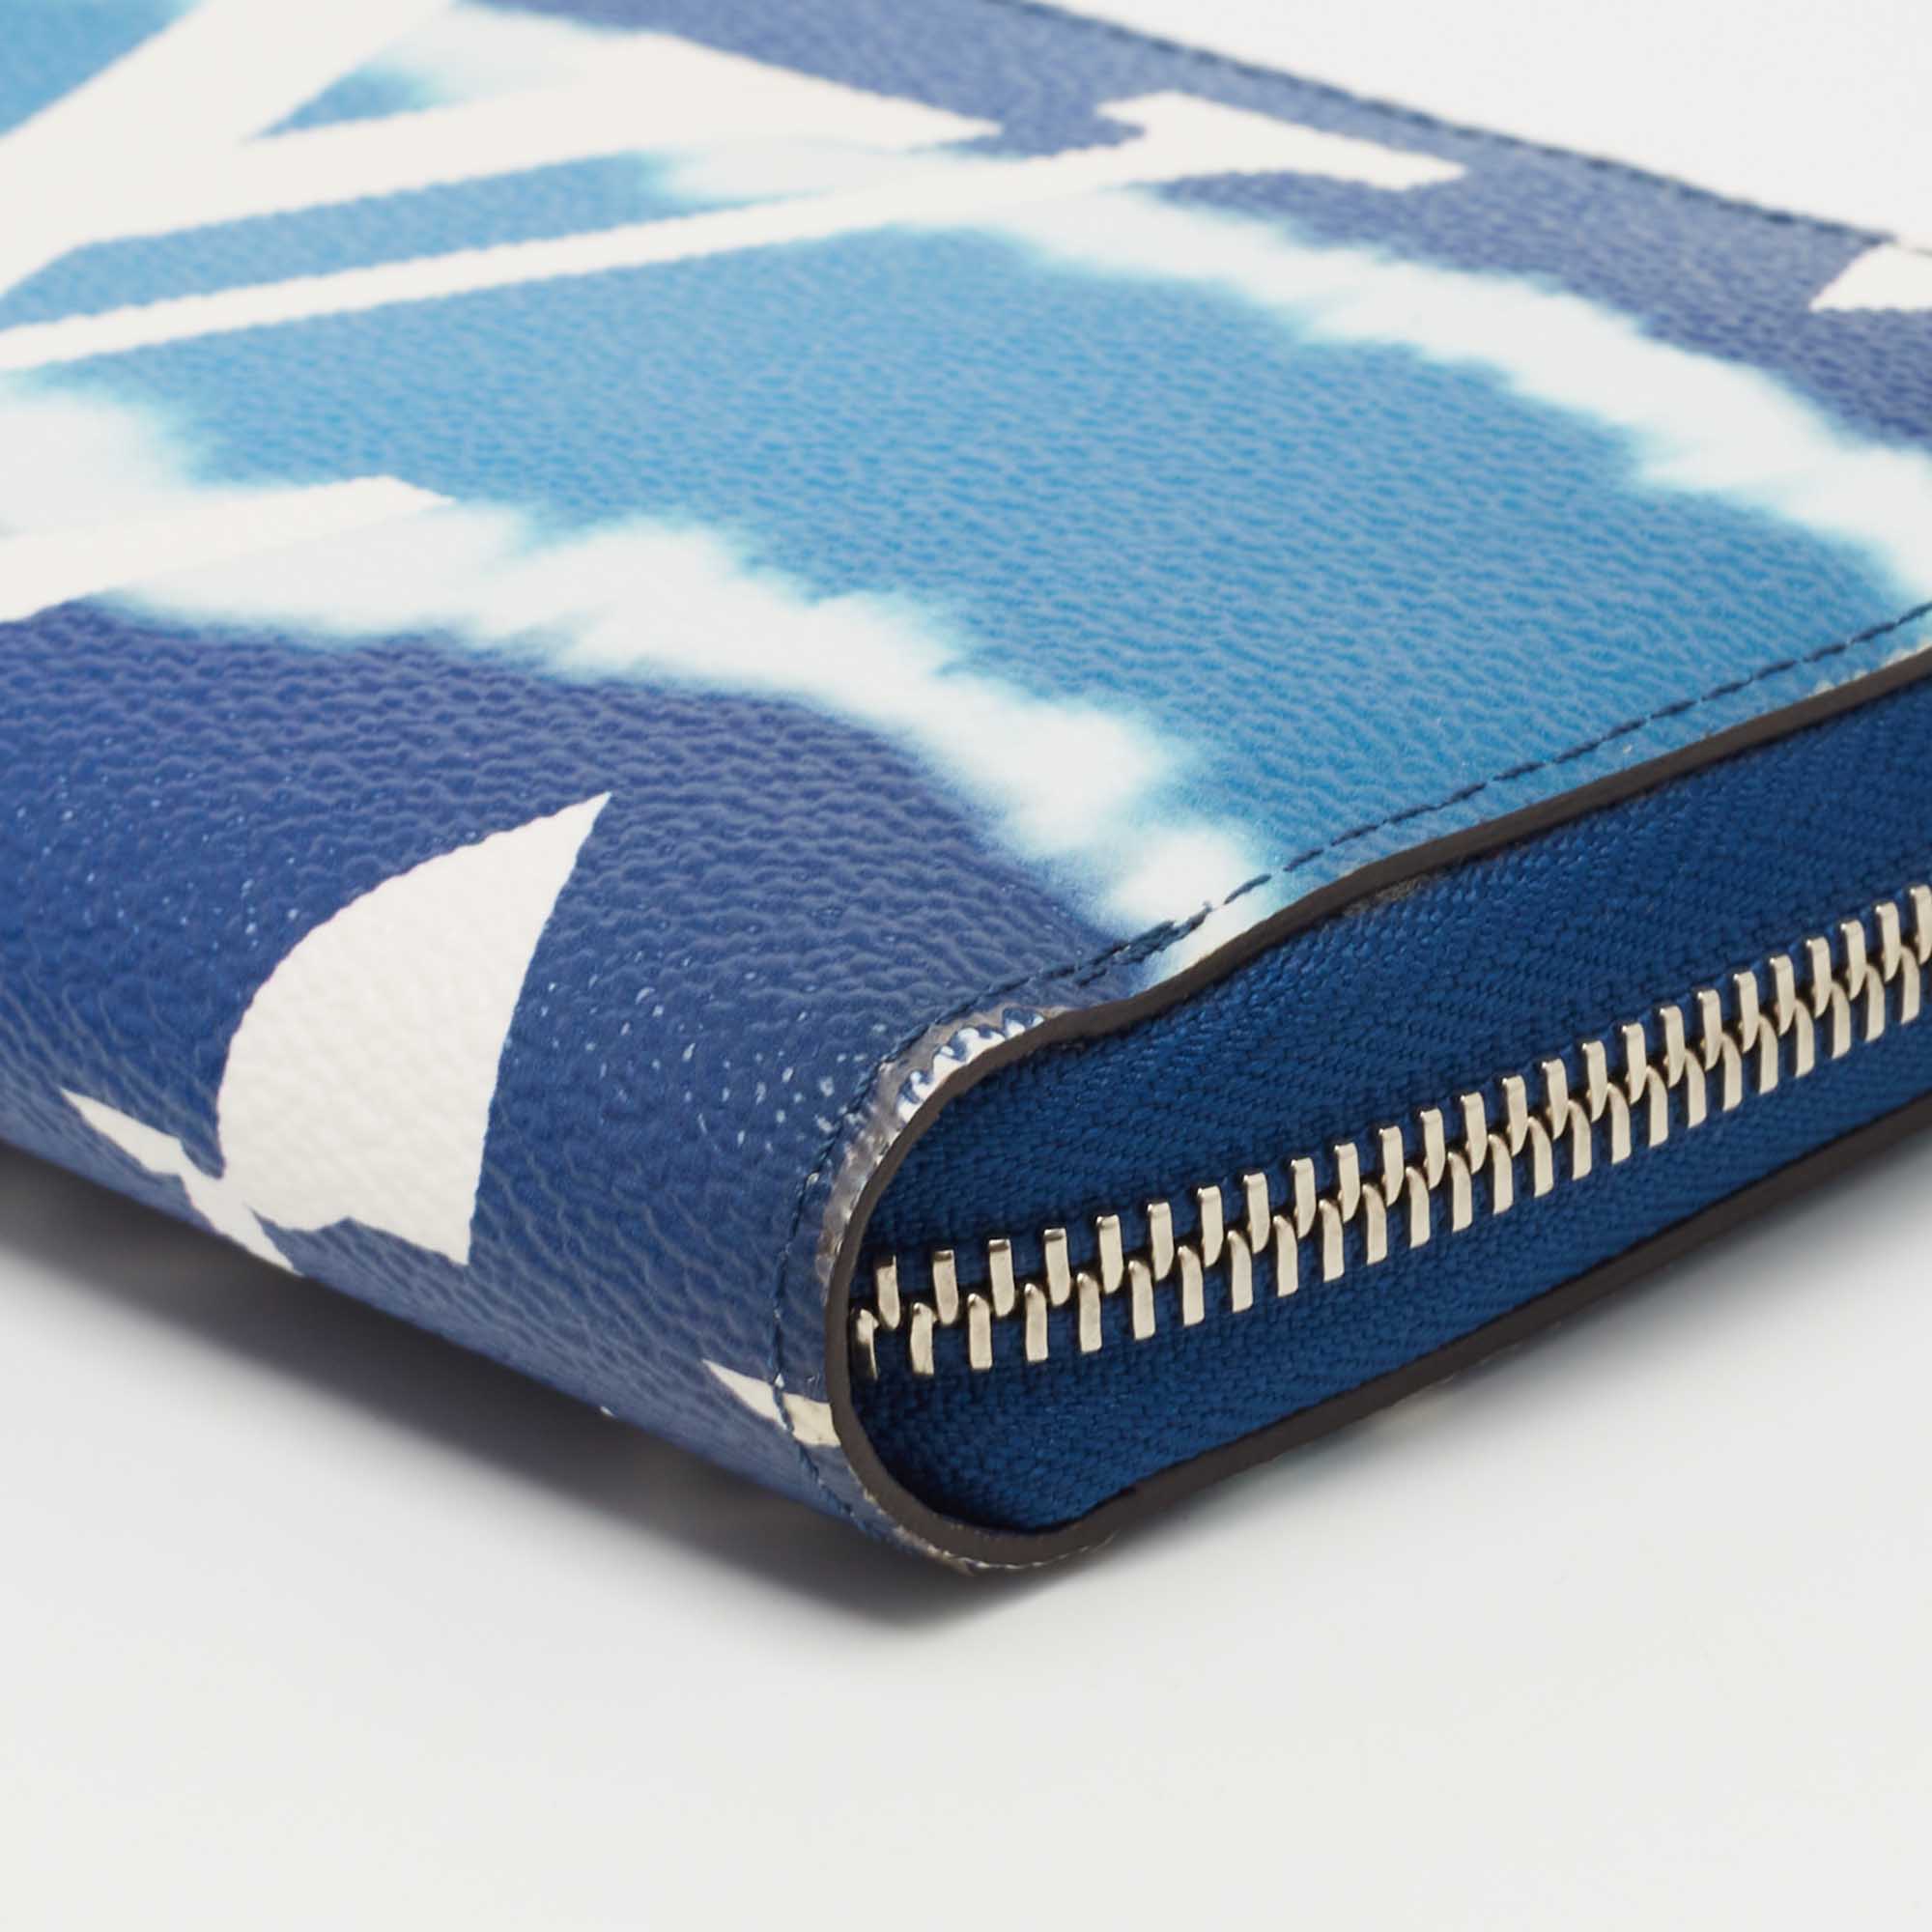 Louis Vuitton Blue Escale Speedy 30B and Matching Zippy Wallet - A